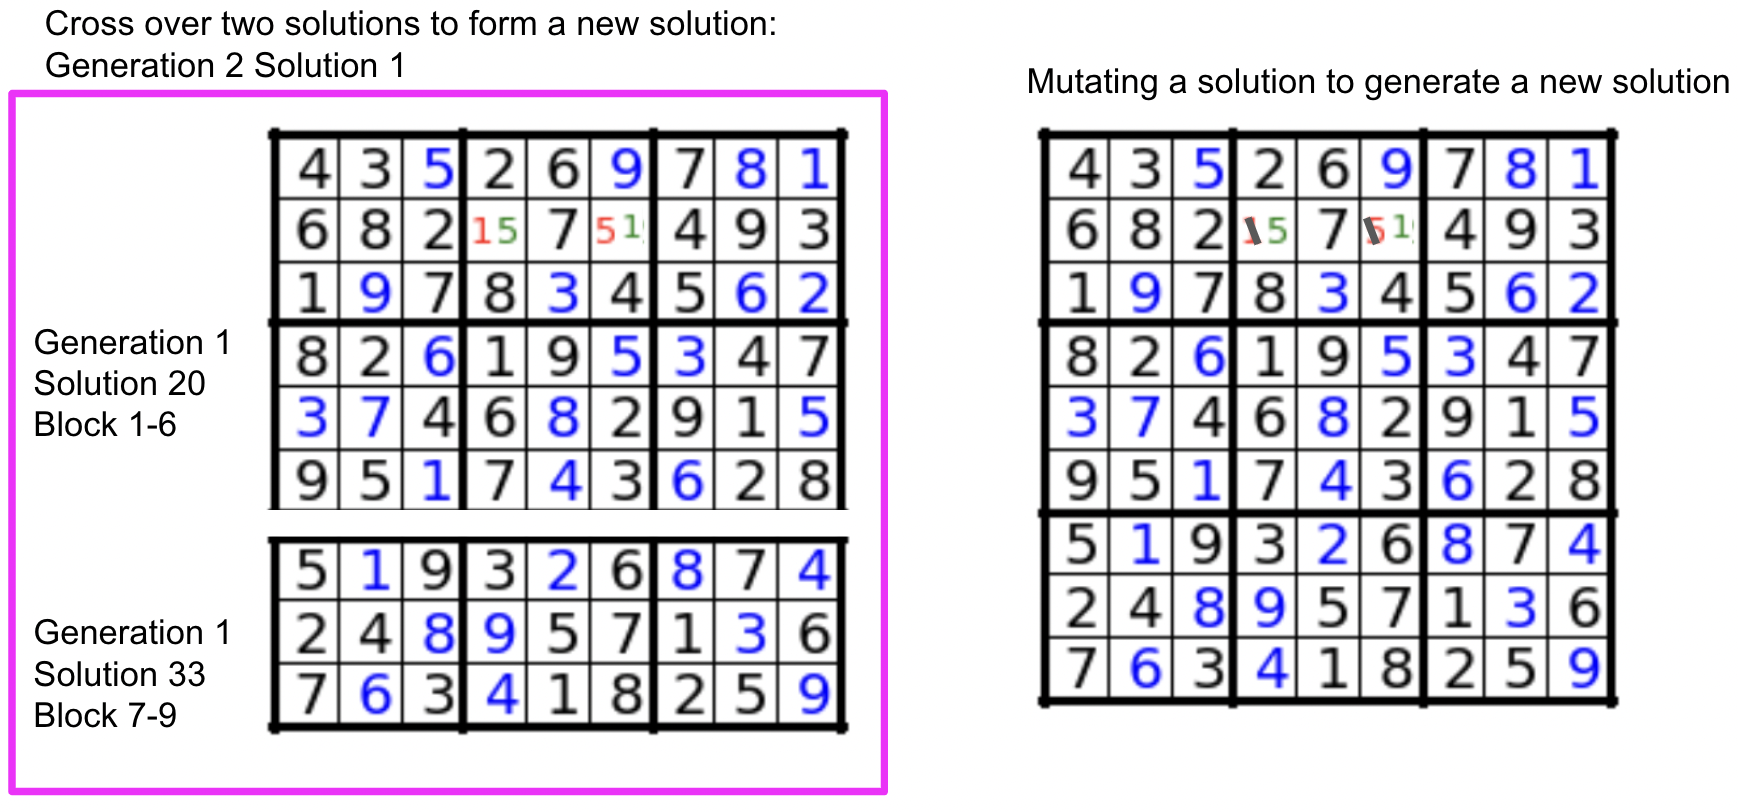 Sudoku 6 x 6 Level 2: Medium Vol. 5: Play Sudoku 6x6 Grid With Solutions  Medium Level Volumes 1-40 Sudoku Cross Sums Variation Travel Paper Logic  Games Solve Japanese Number Puzzles Enjoy